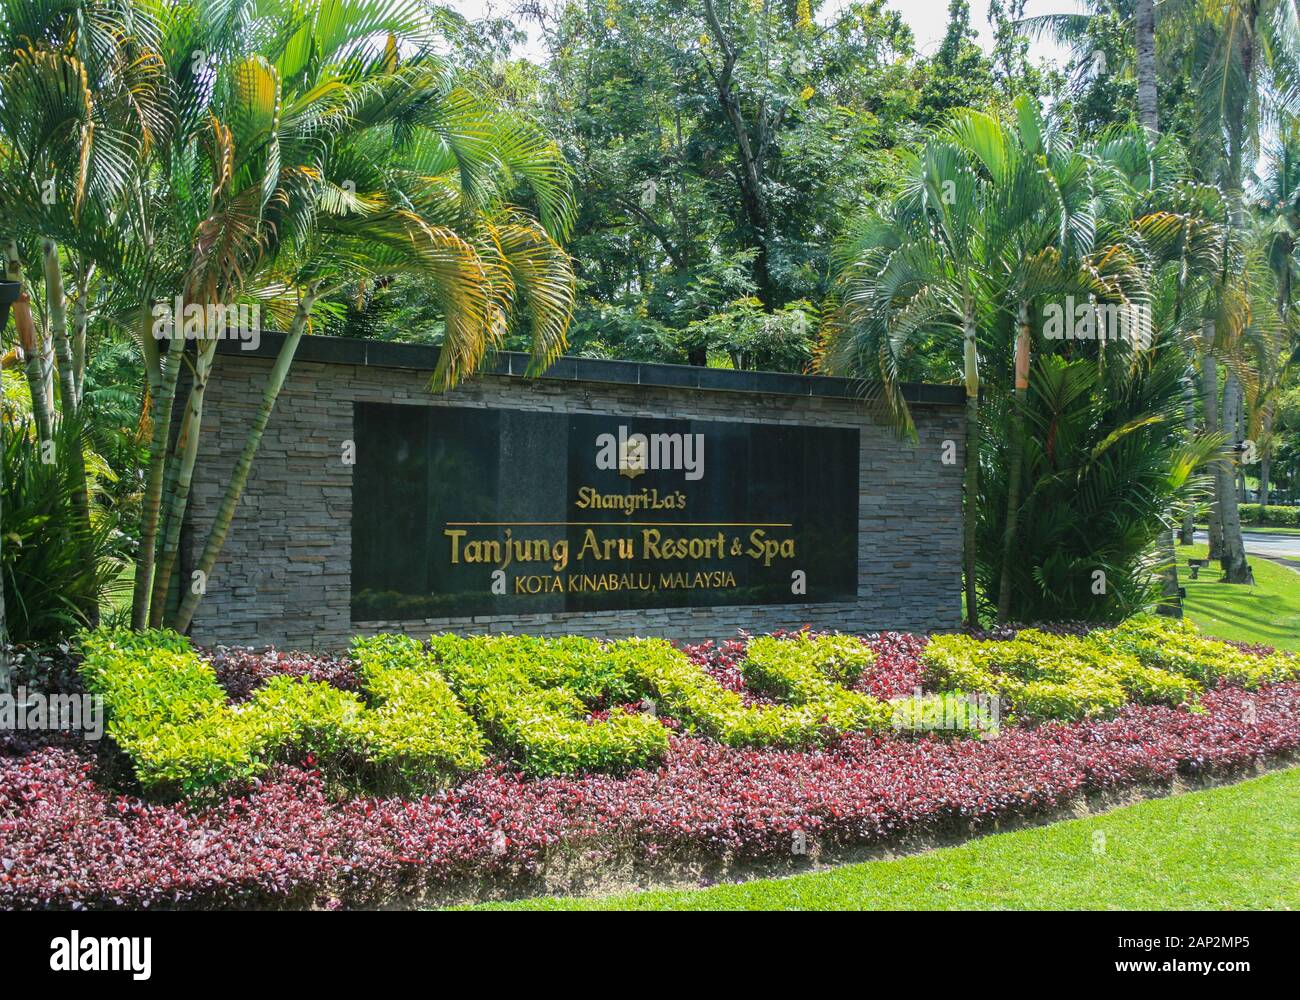 Entrance to Shangri-La Tanjung Aru resort in Kota Kinabalu, Borneo Malaysia Stock Photo